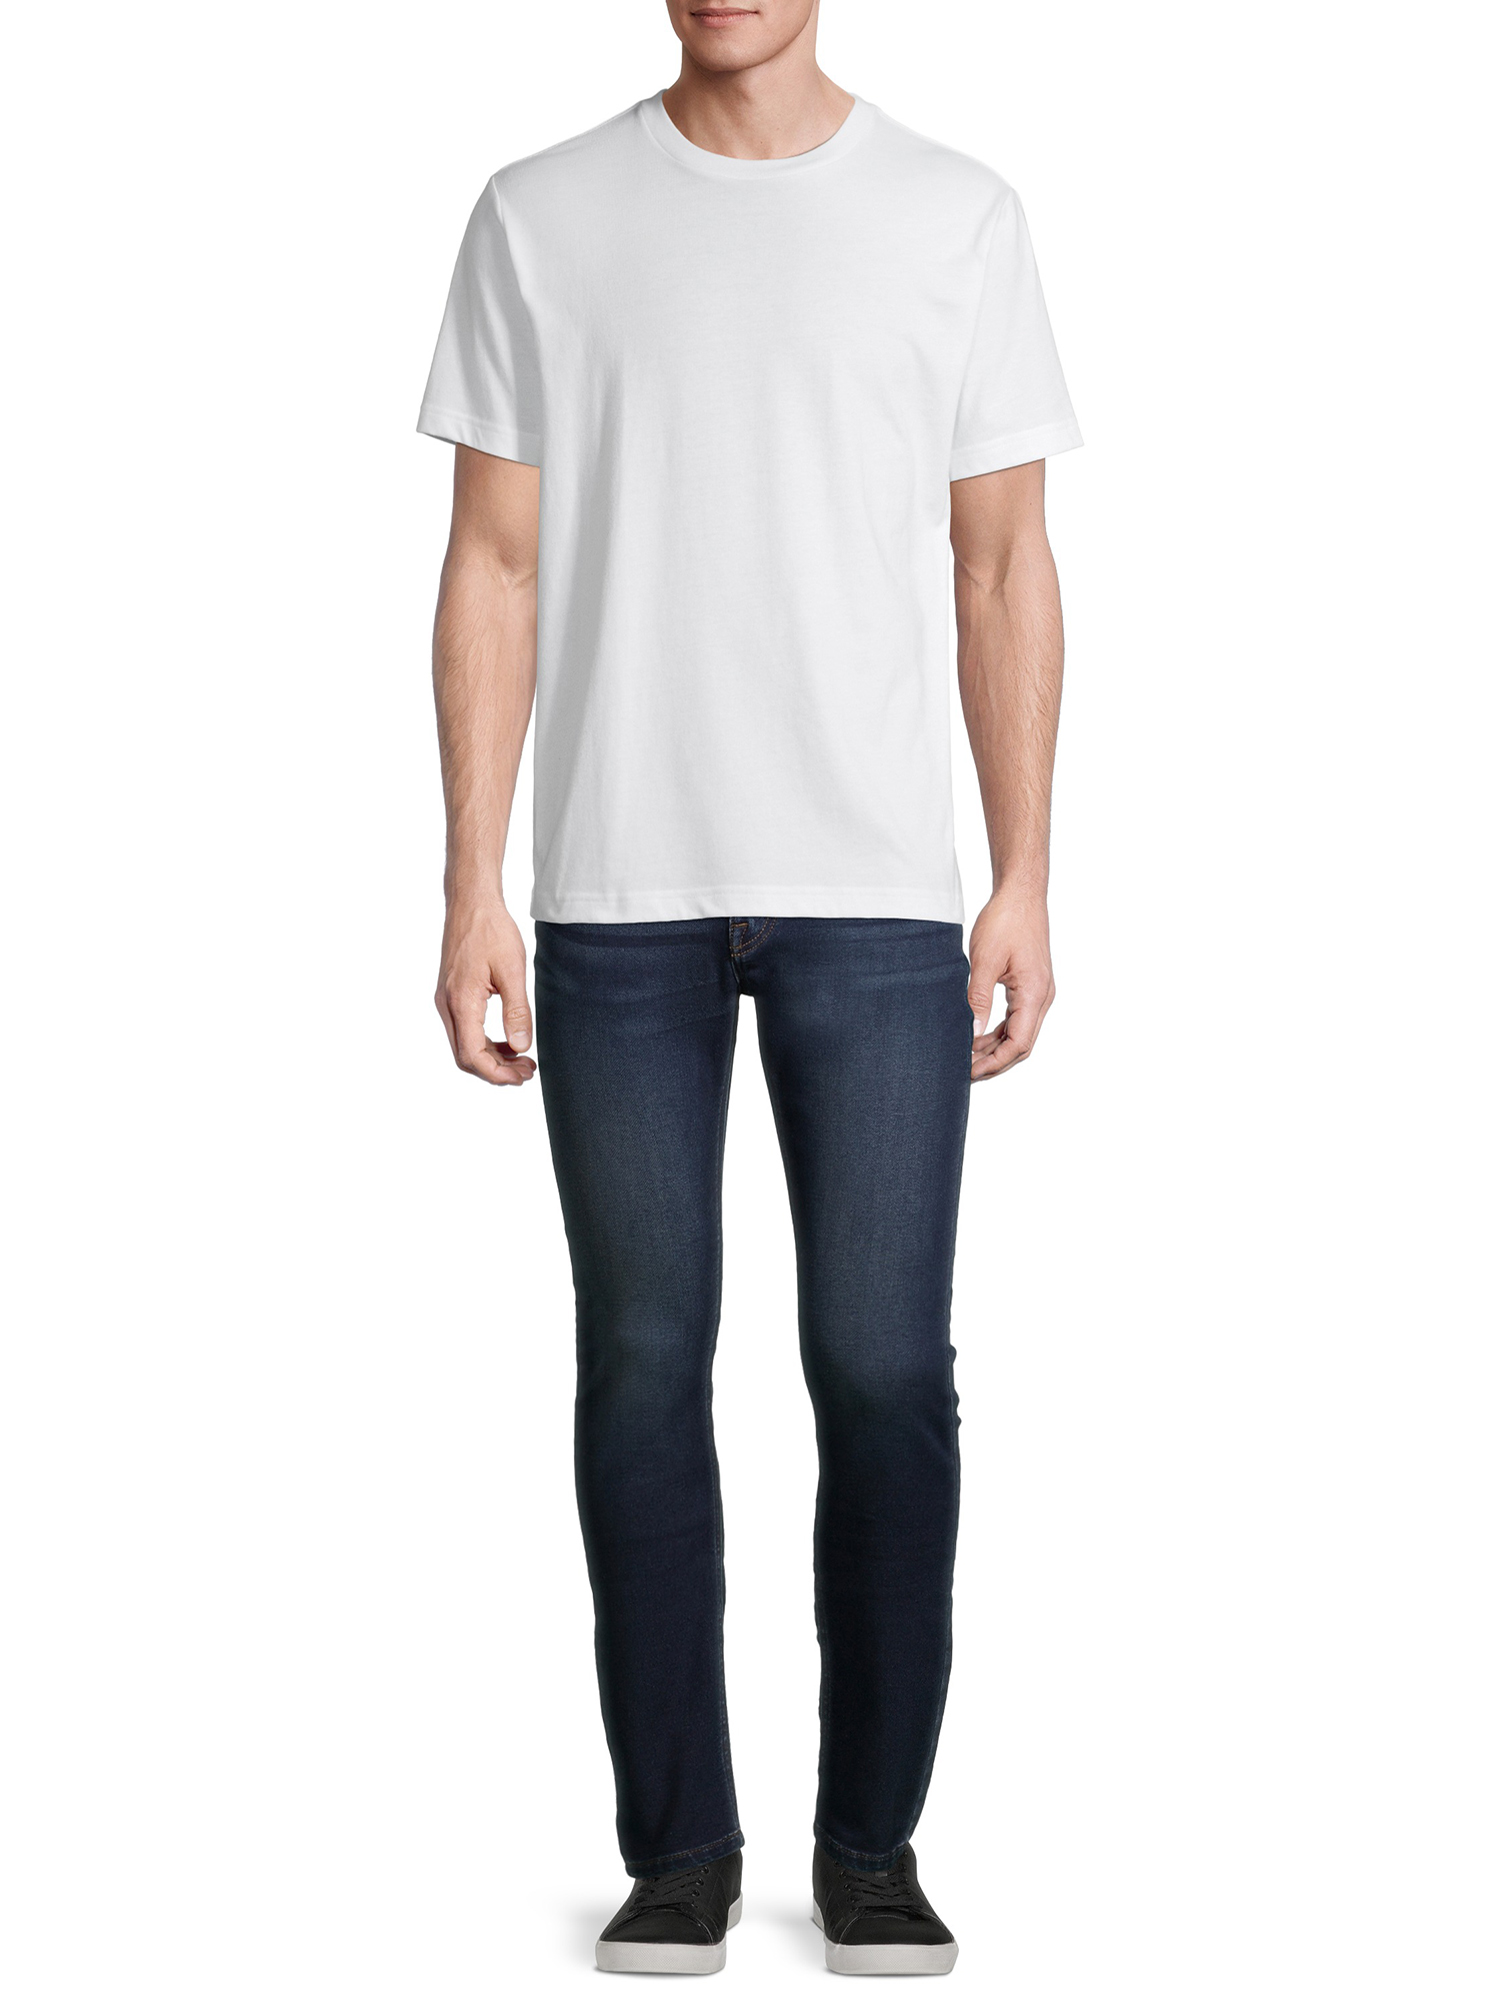 George Men's Short Sleeve Solid Crewneck T-Shirt, 3-Pack - image 4 of 4